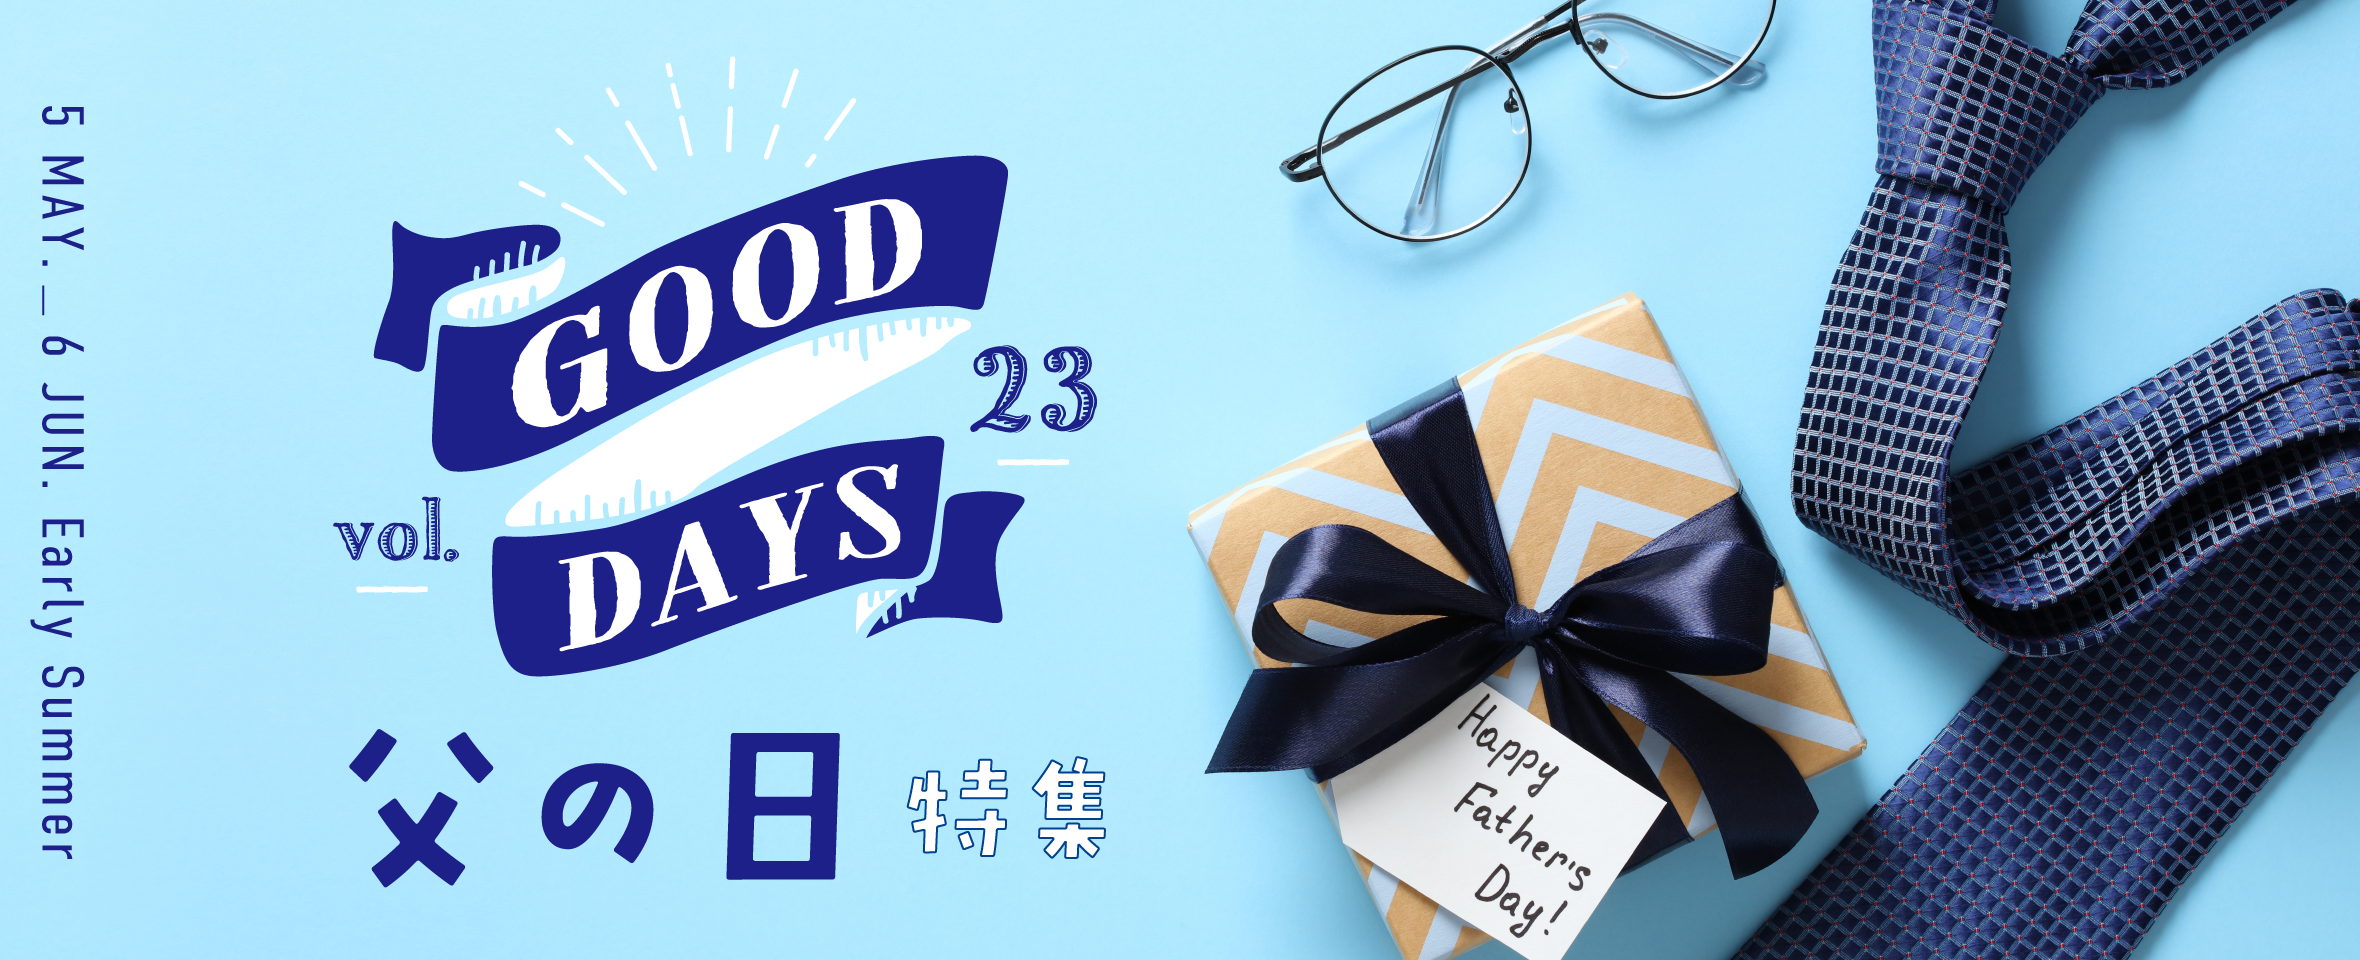 GOOD DAYS Vol.23 FATHER'S DAY [父の日]特集